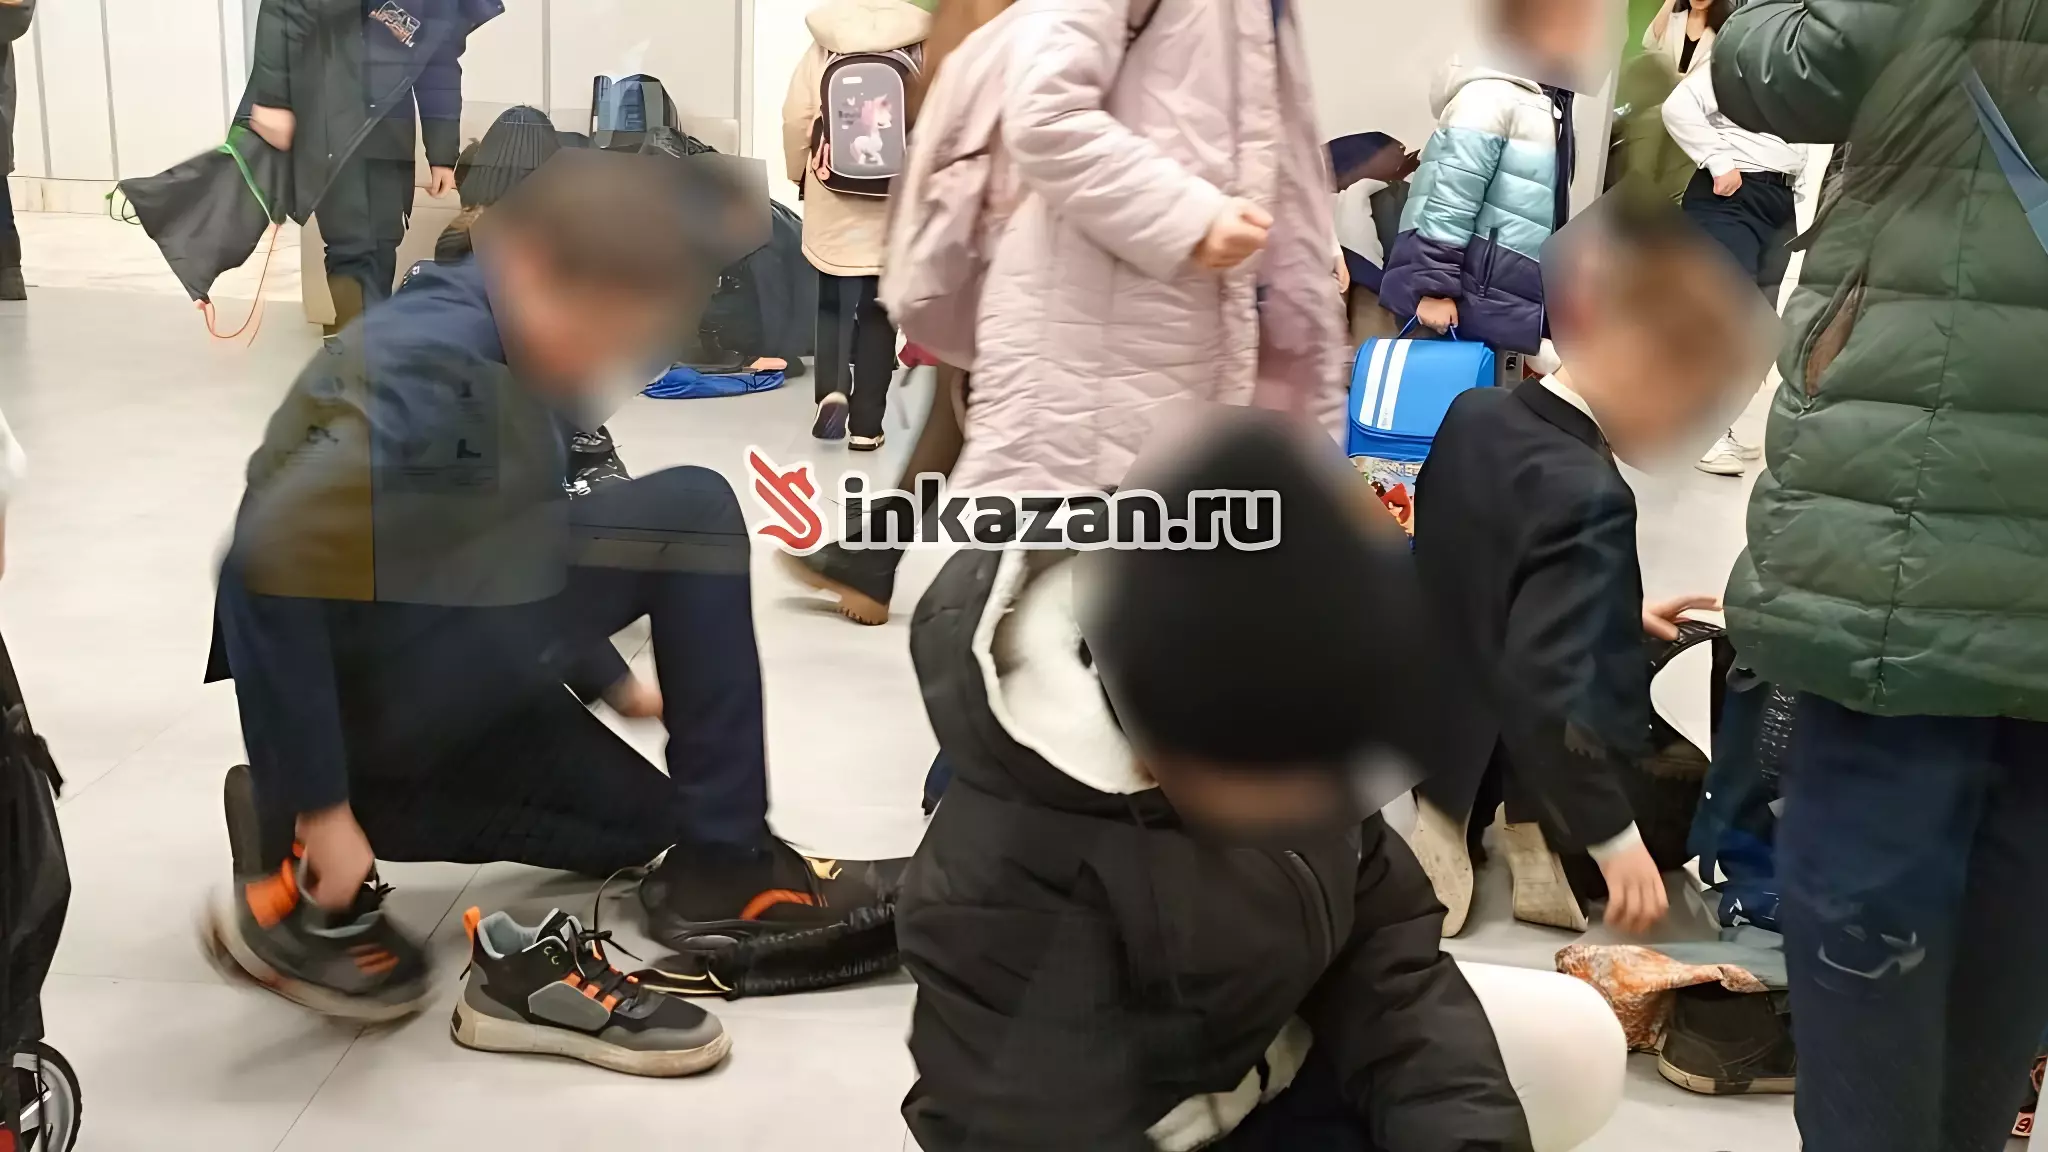 Казанским школьникам предоставили скамейки после публикации Inkazan